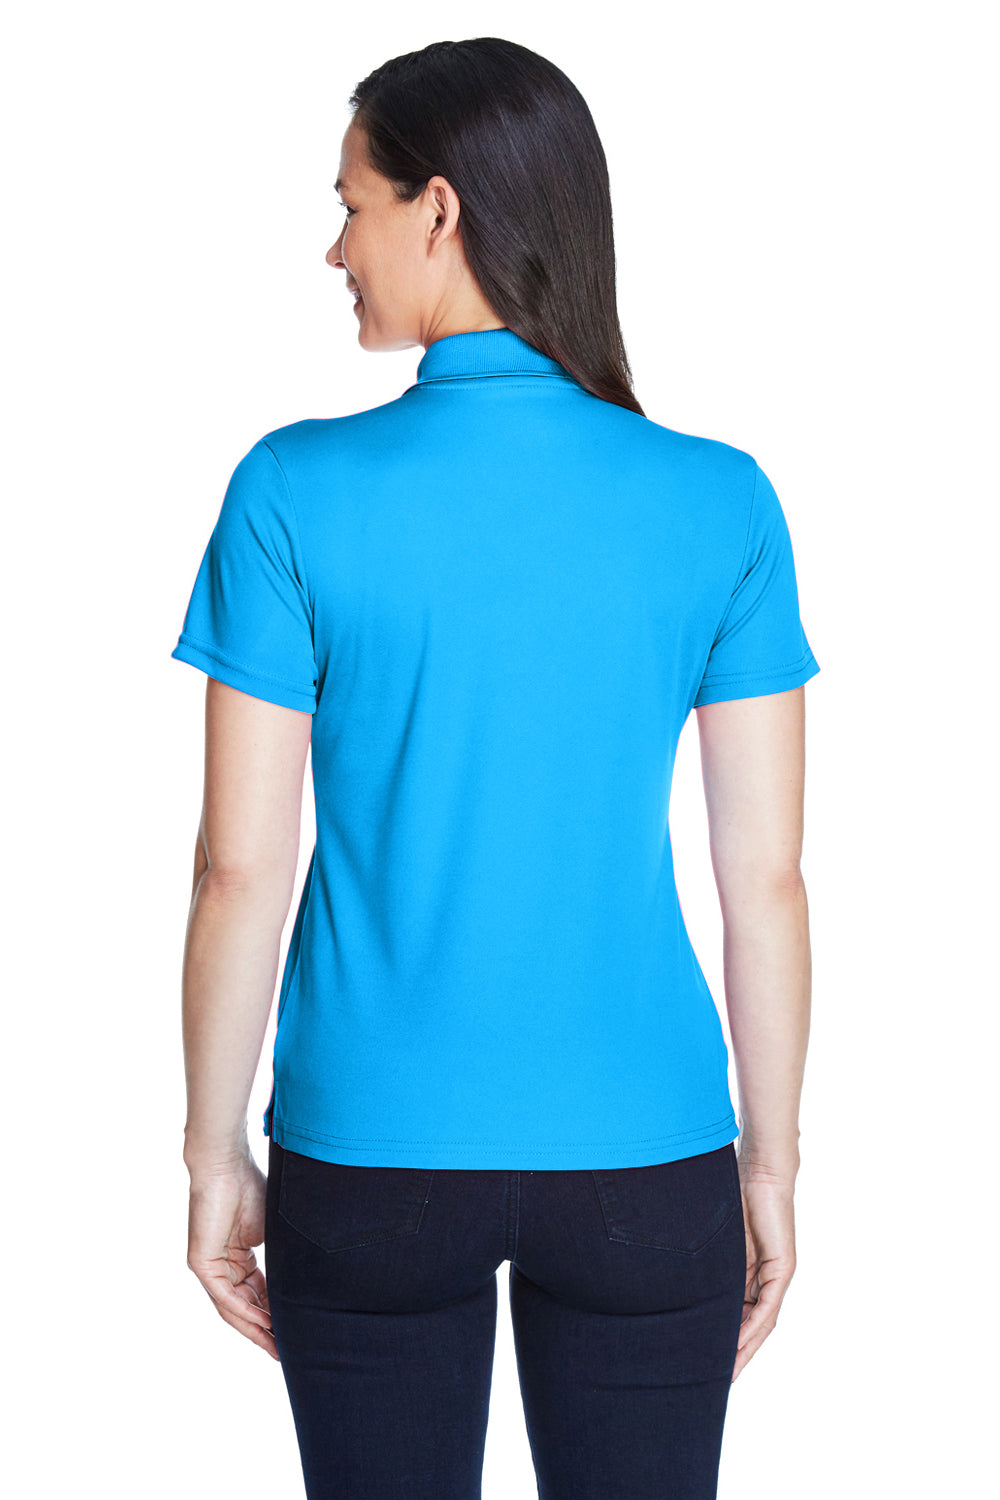 Core 365 78181 Womens Origin Performance Moisture Wicking Short Sleeve Polo Shirt Electric Blue Back